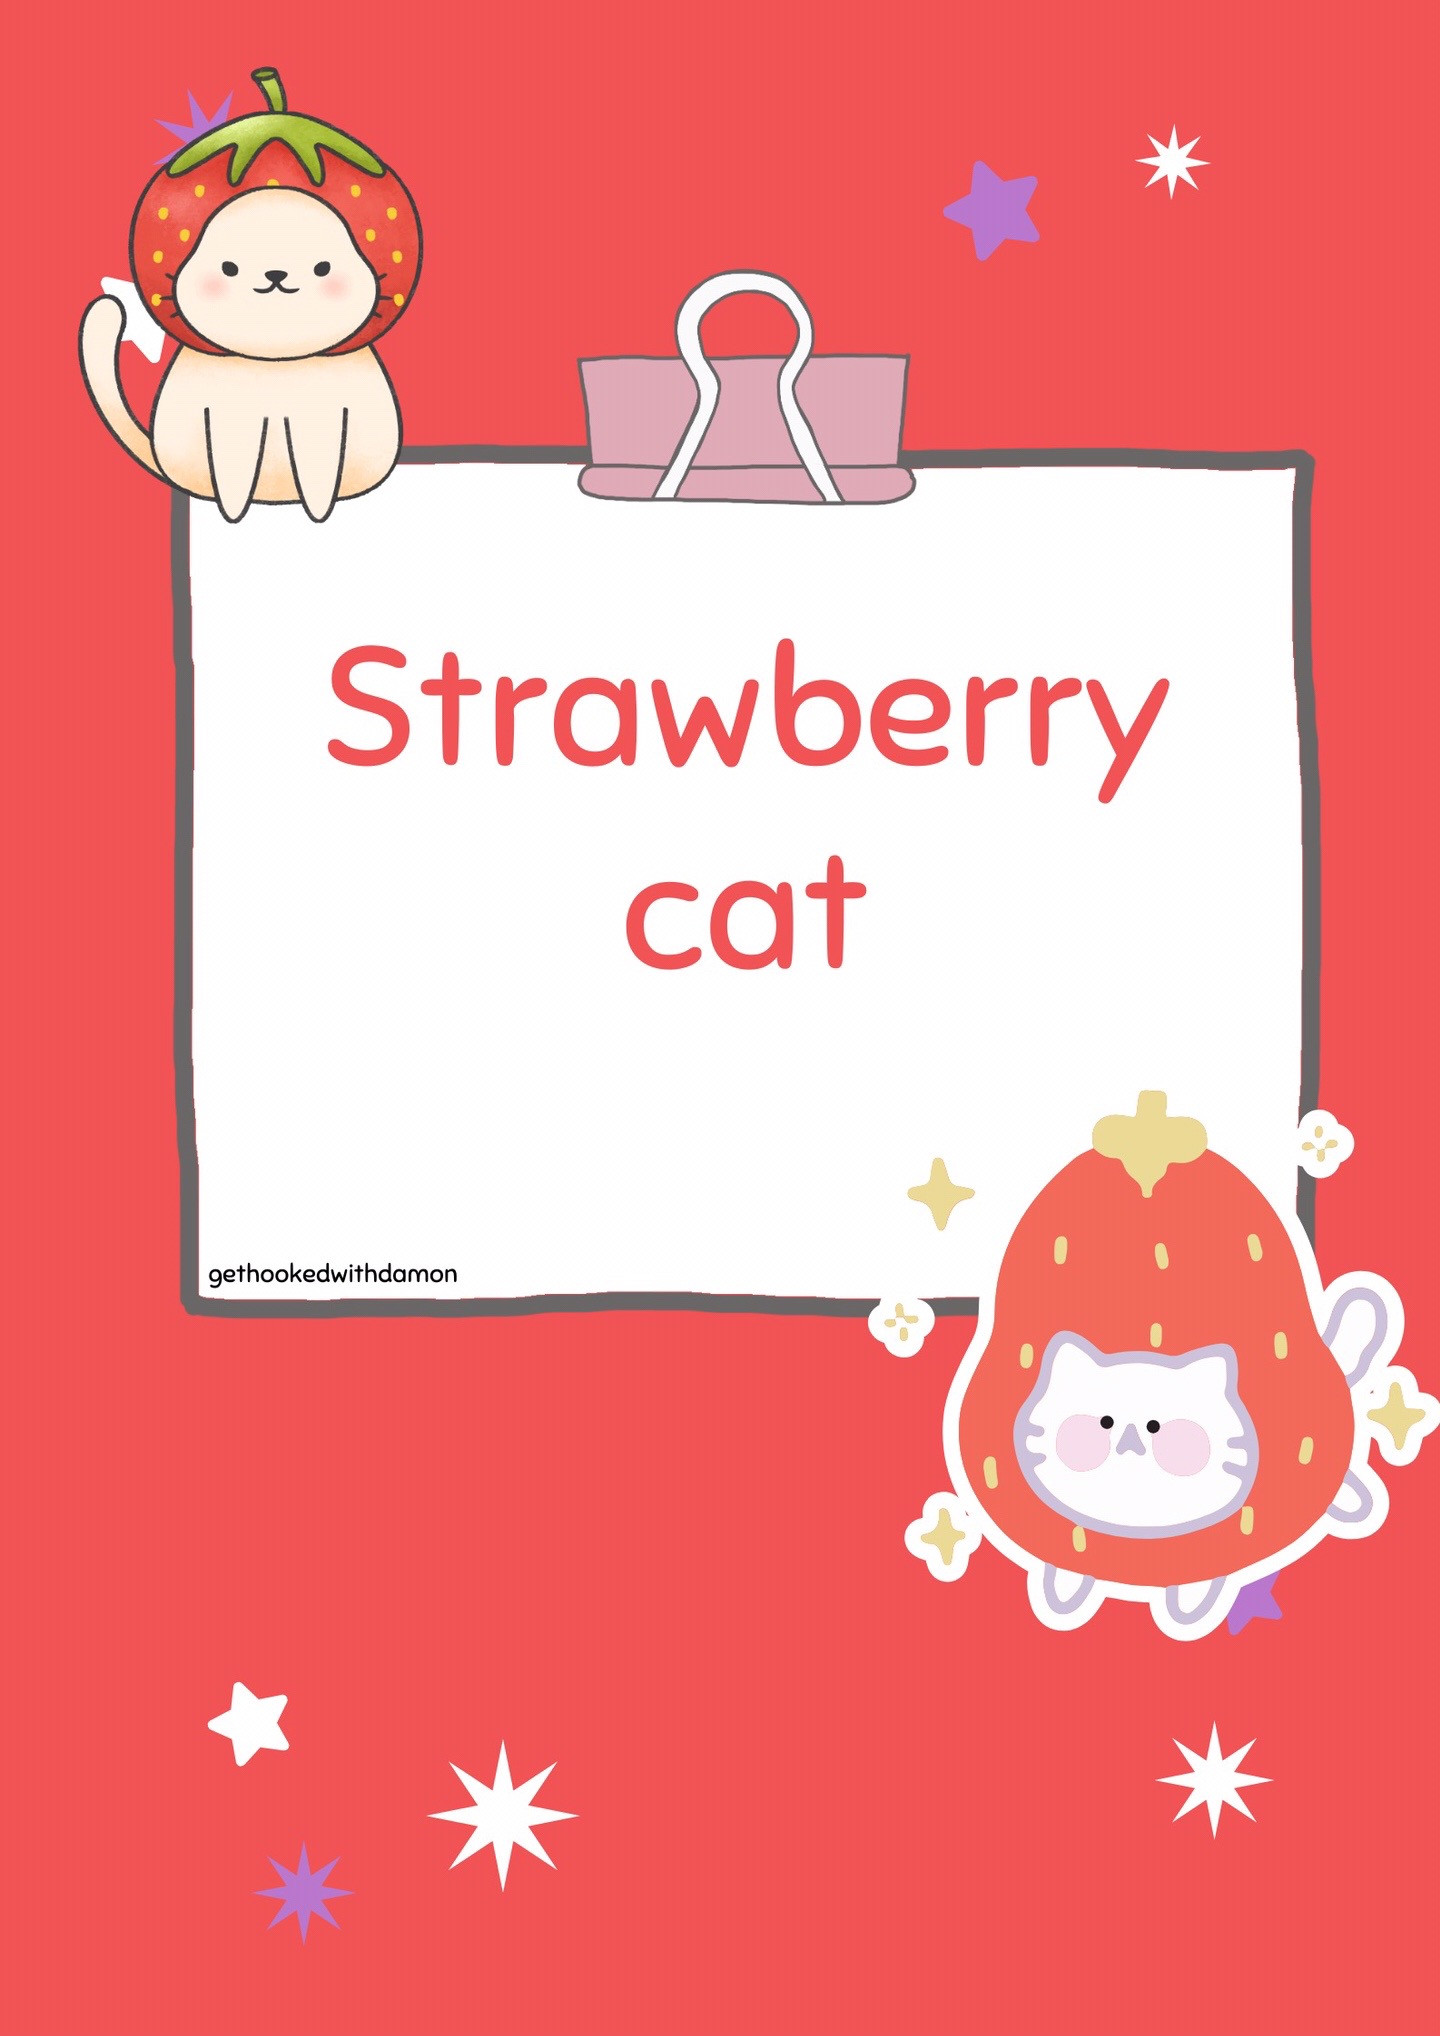 Strawberry cat pattern🍓